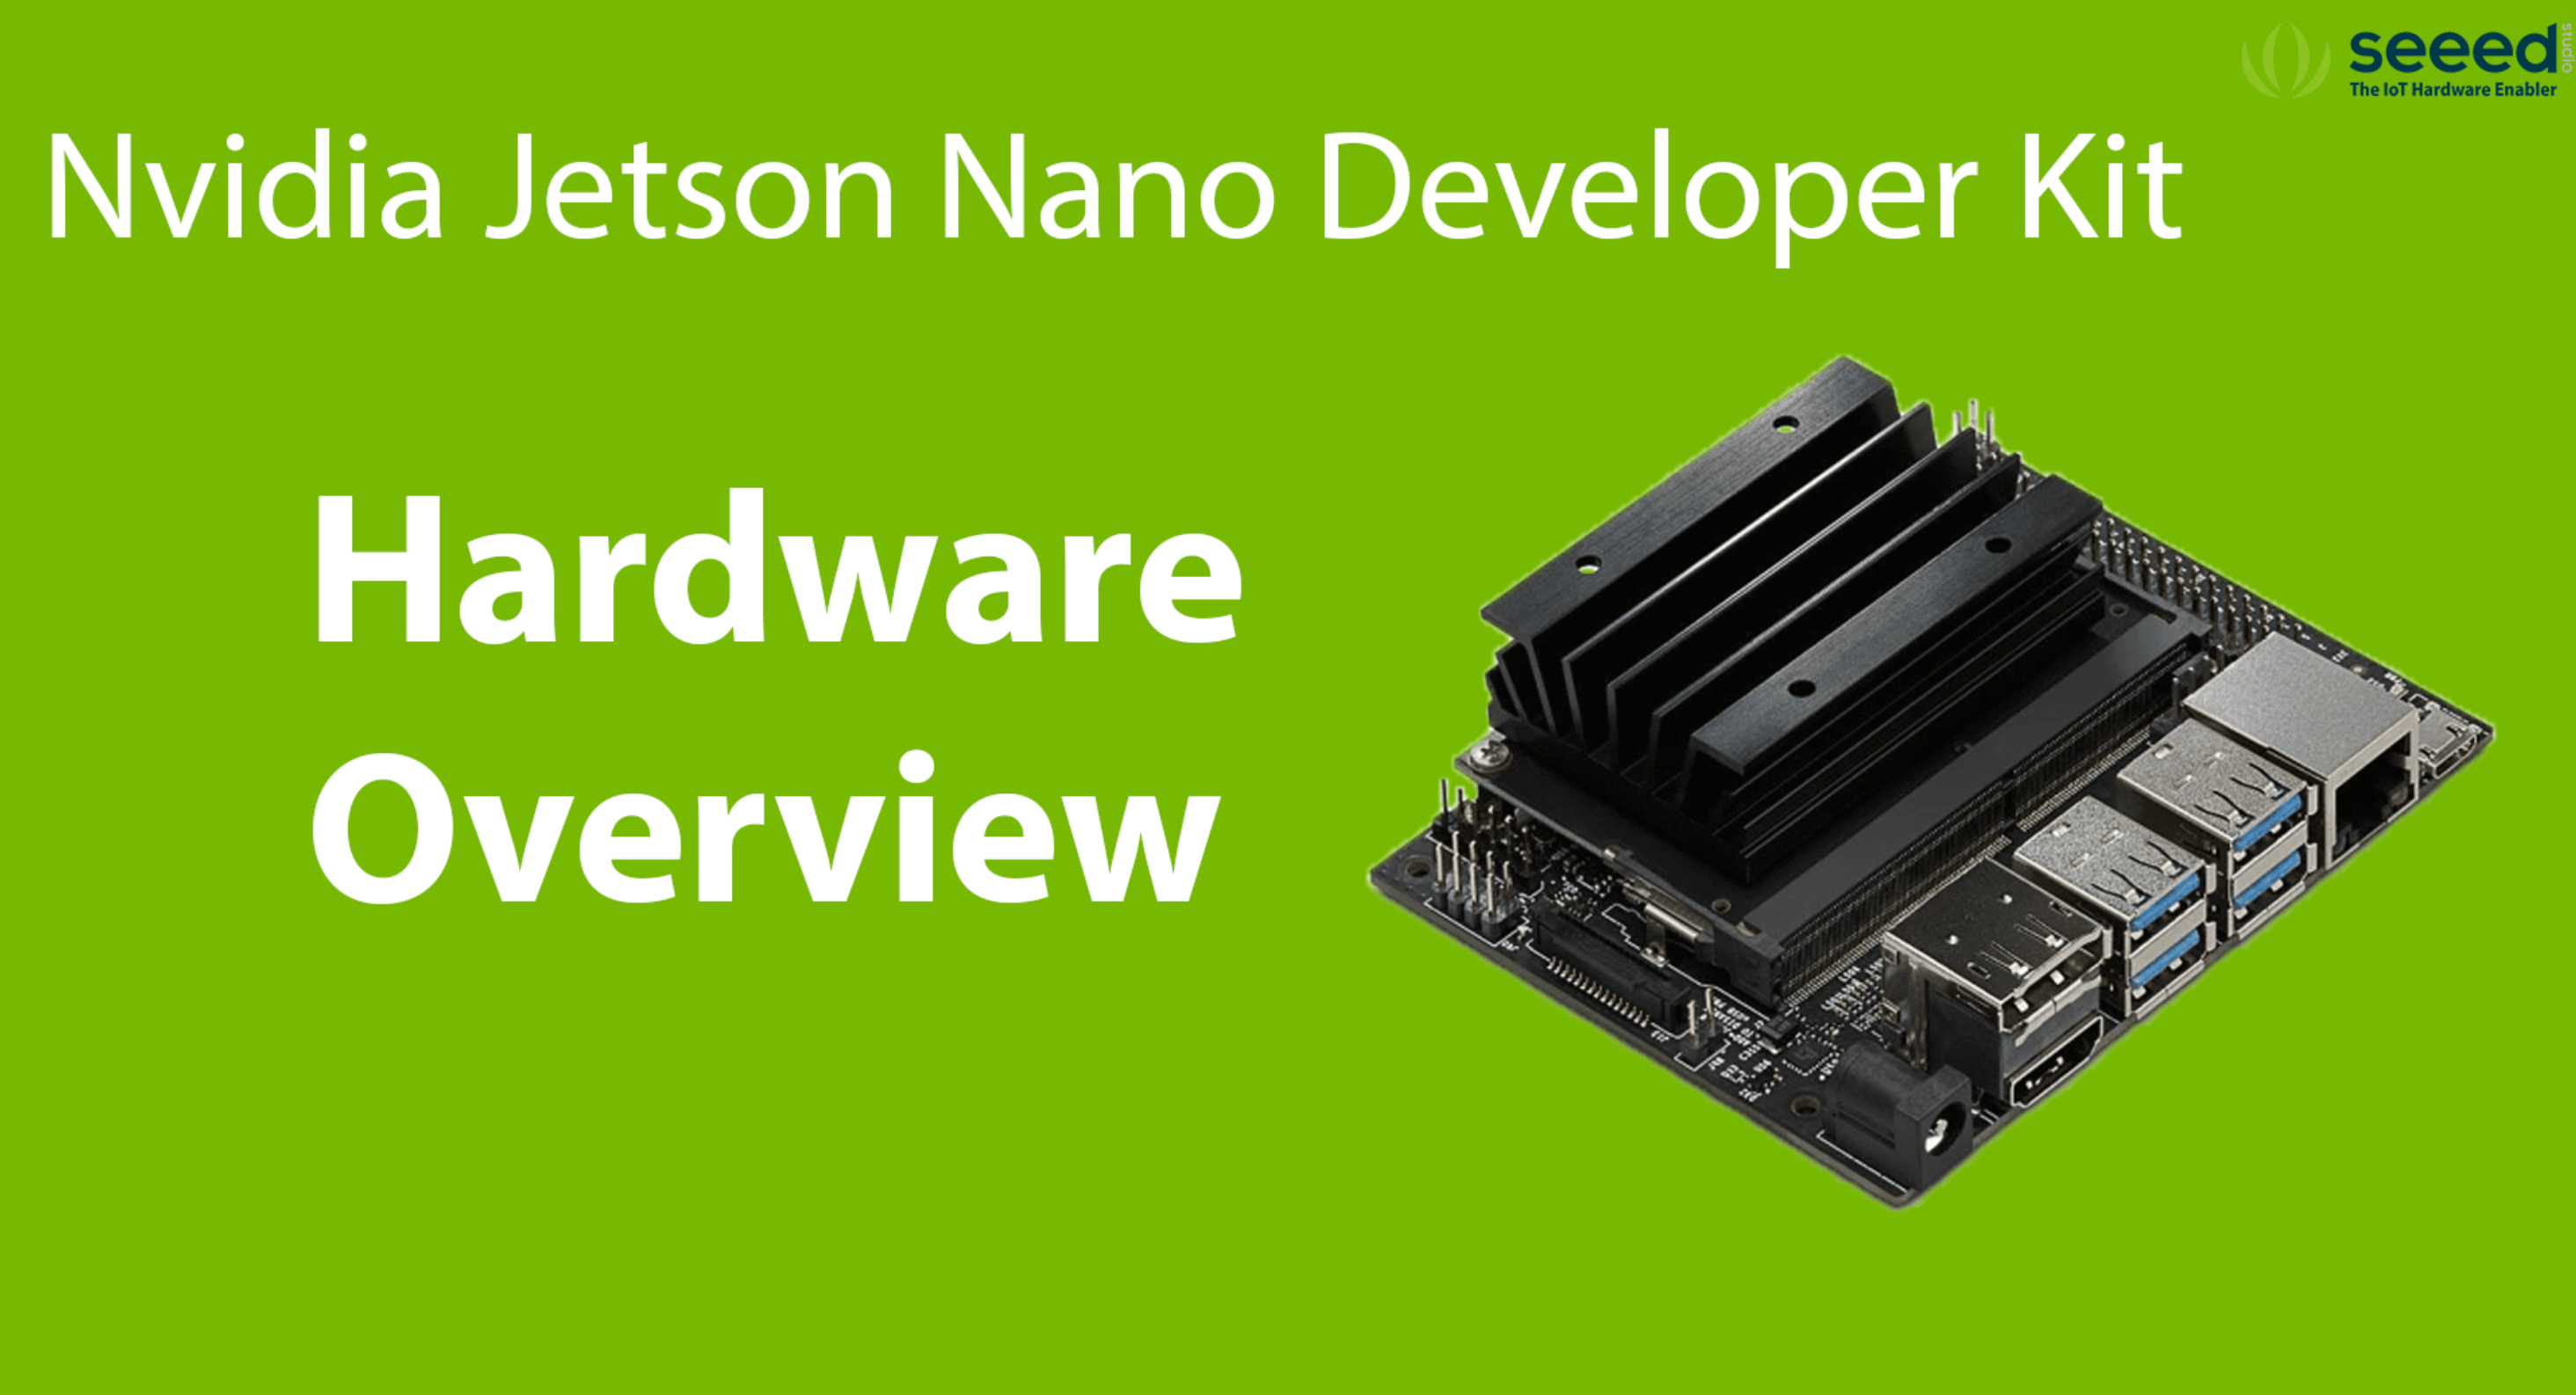 NVIDIA Jetson Nano Developer Kit Detailed Review - Latest Open 